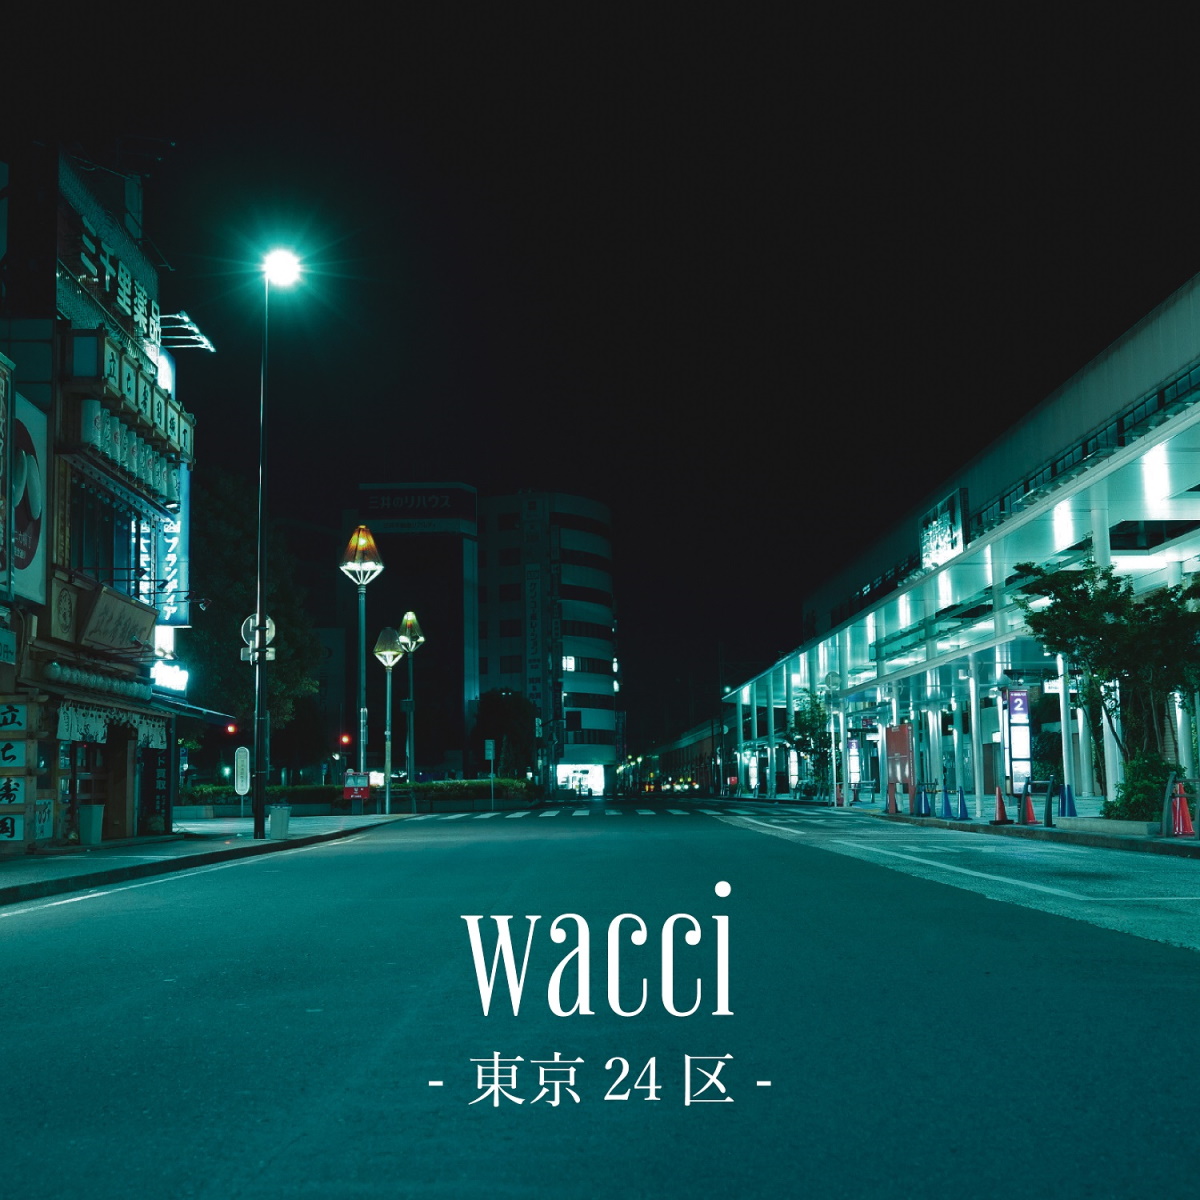 『wacci - 東京24区』収録の『東京24区』ジャケット